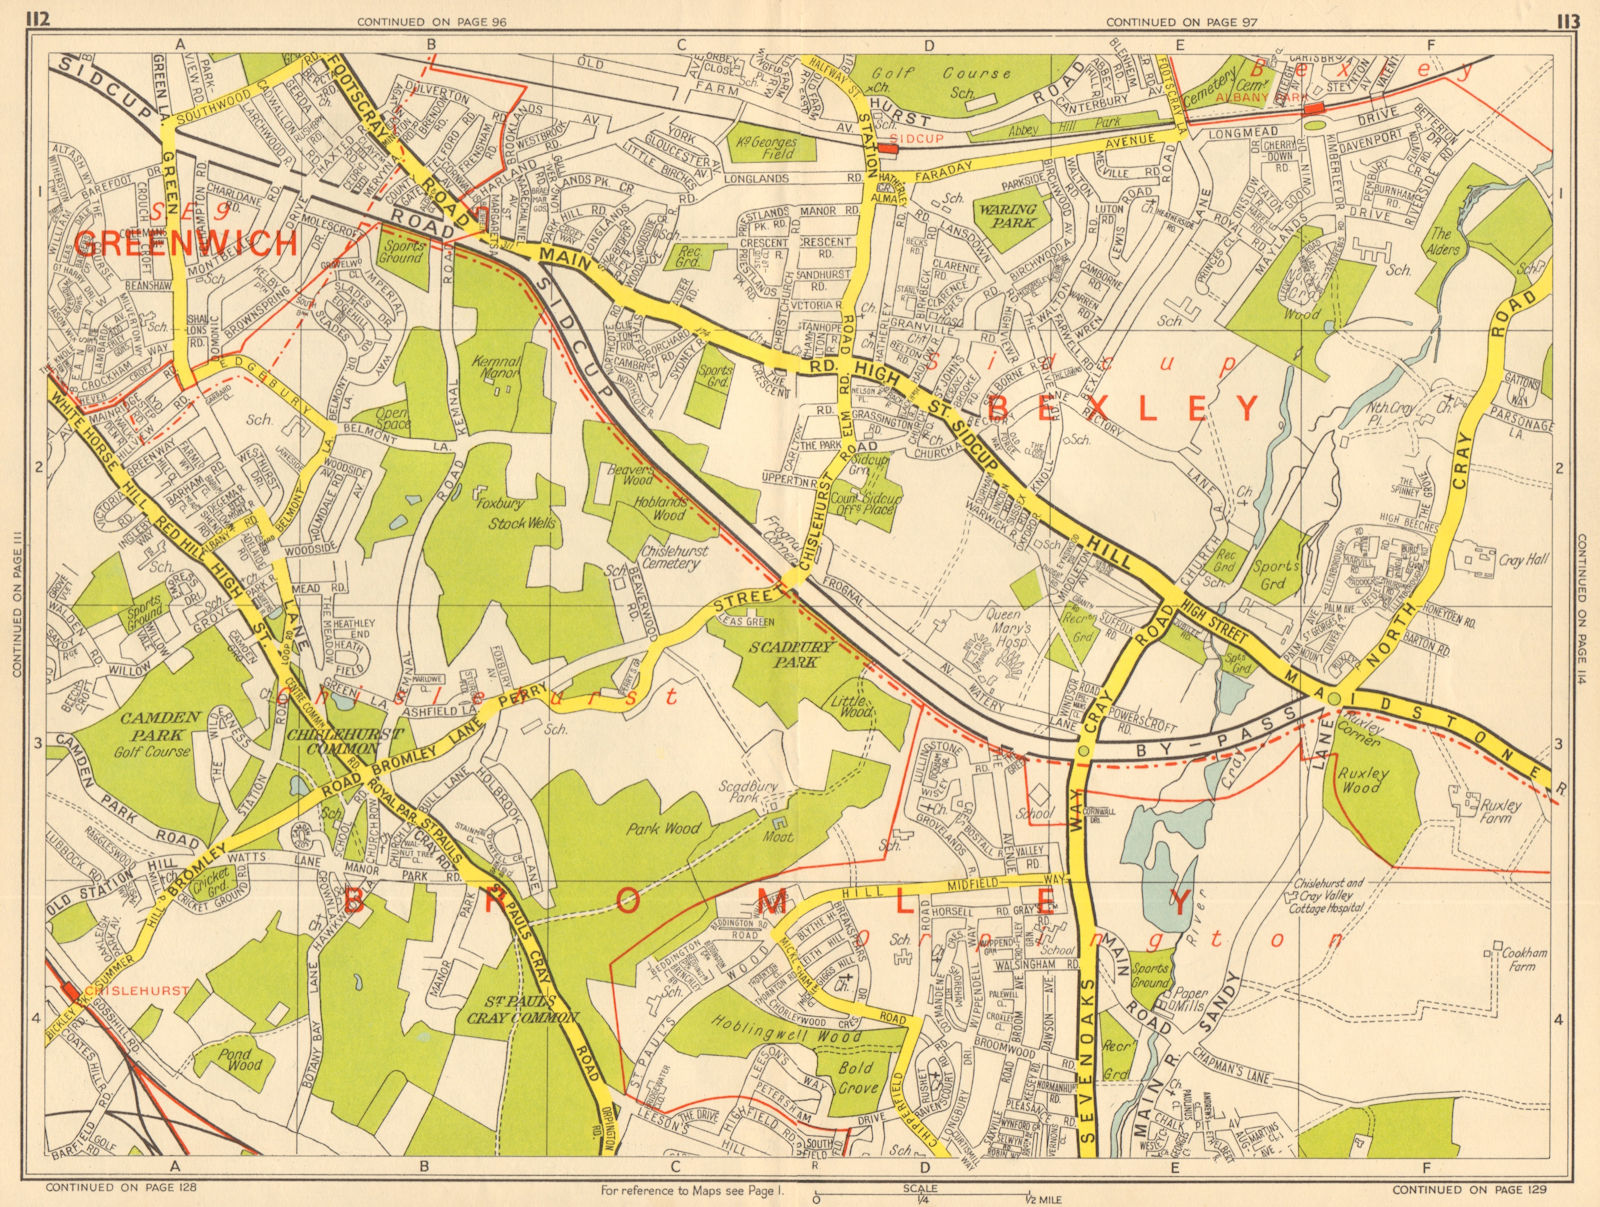 CHISLEHURST SIDCUP Orpington Bexley Eltham. GEOGRAPHERS' A-Z 1964 old map